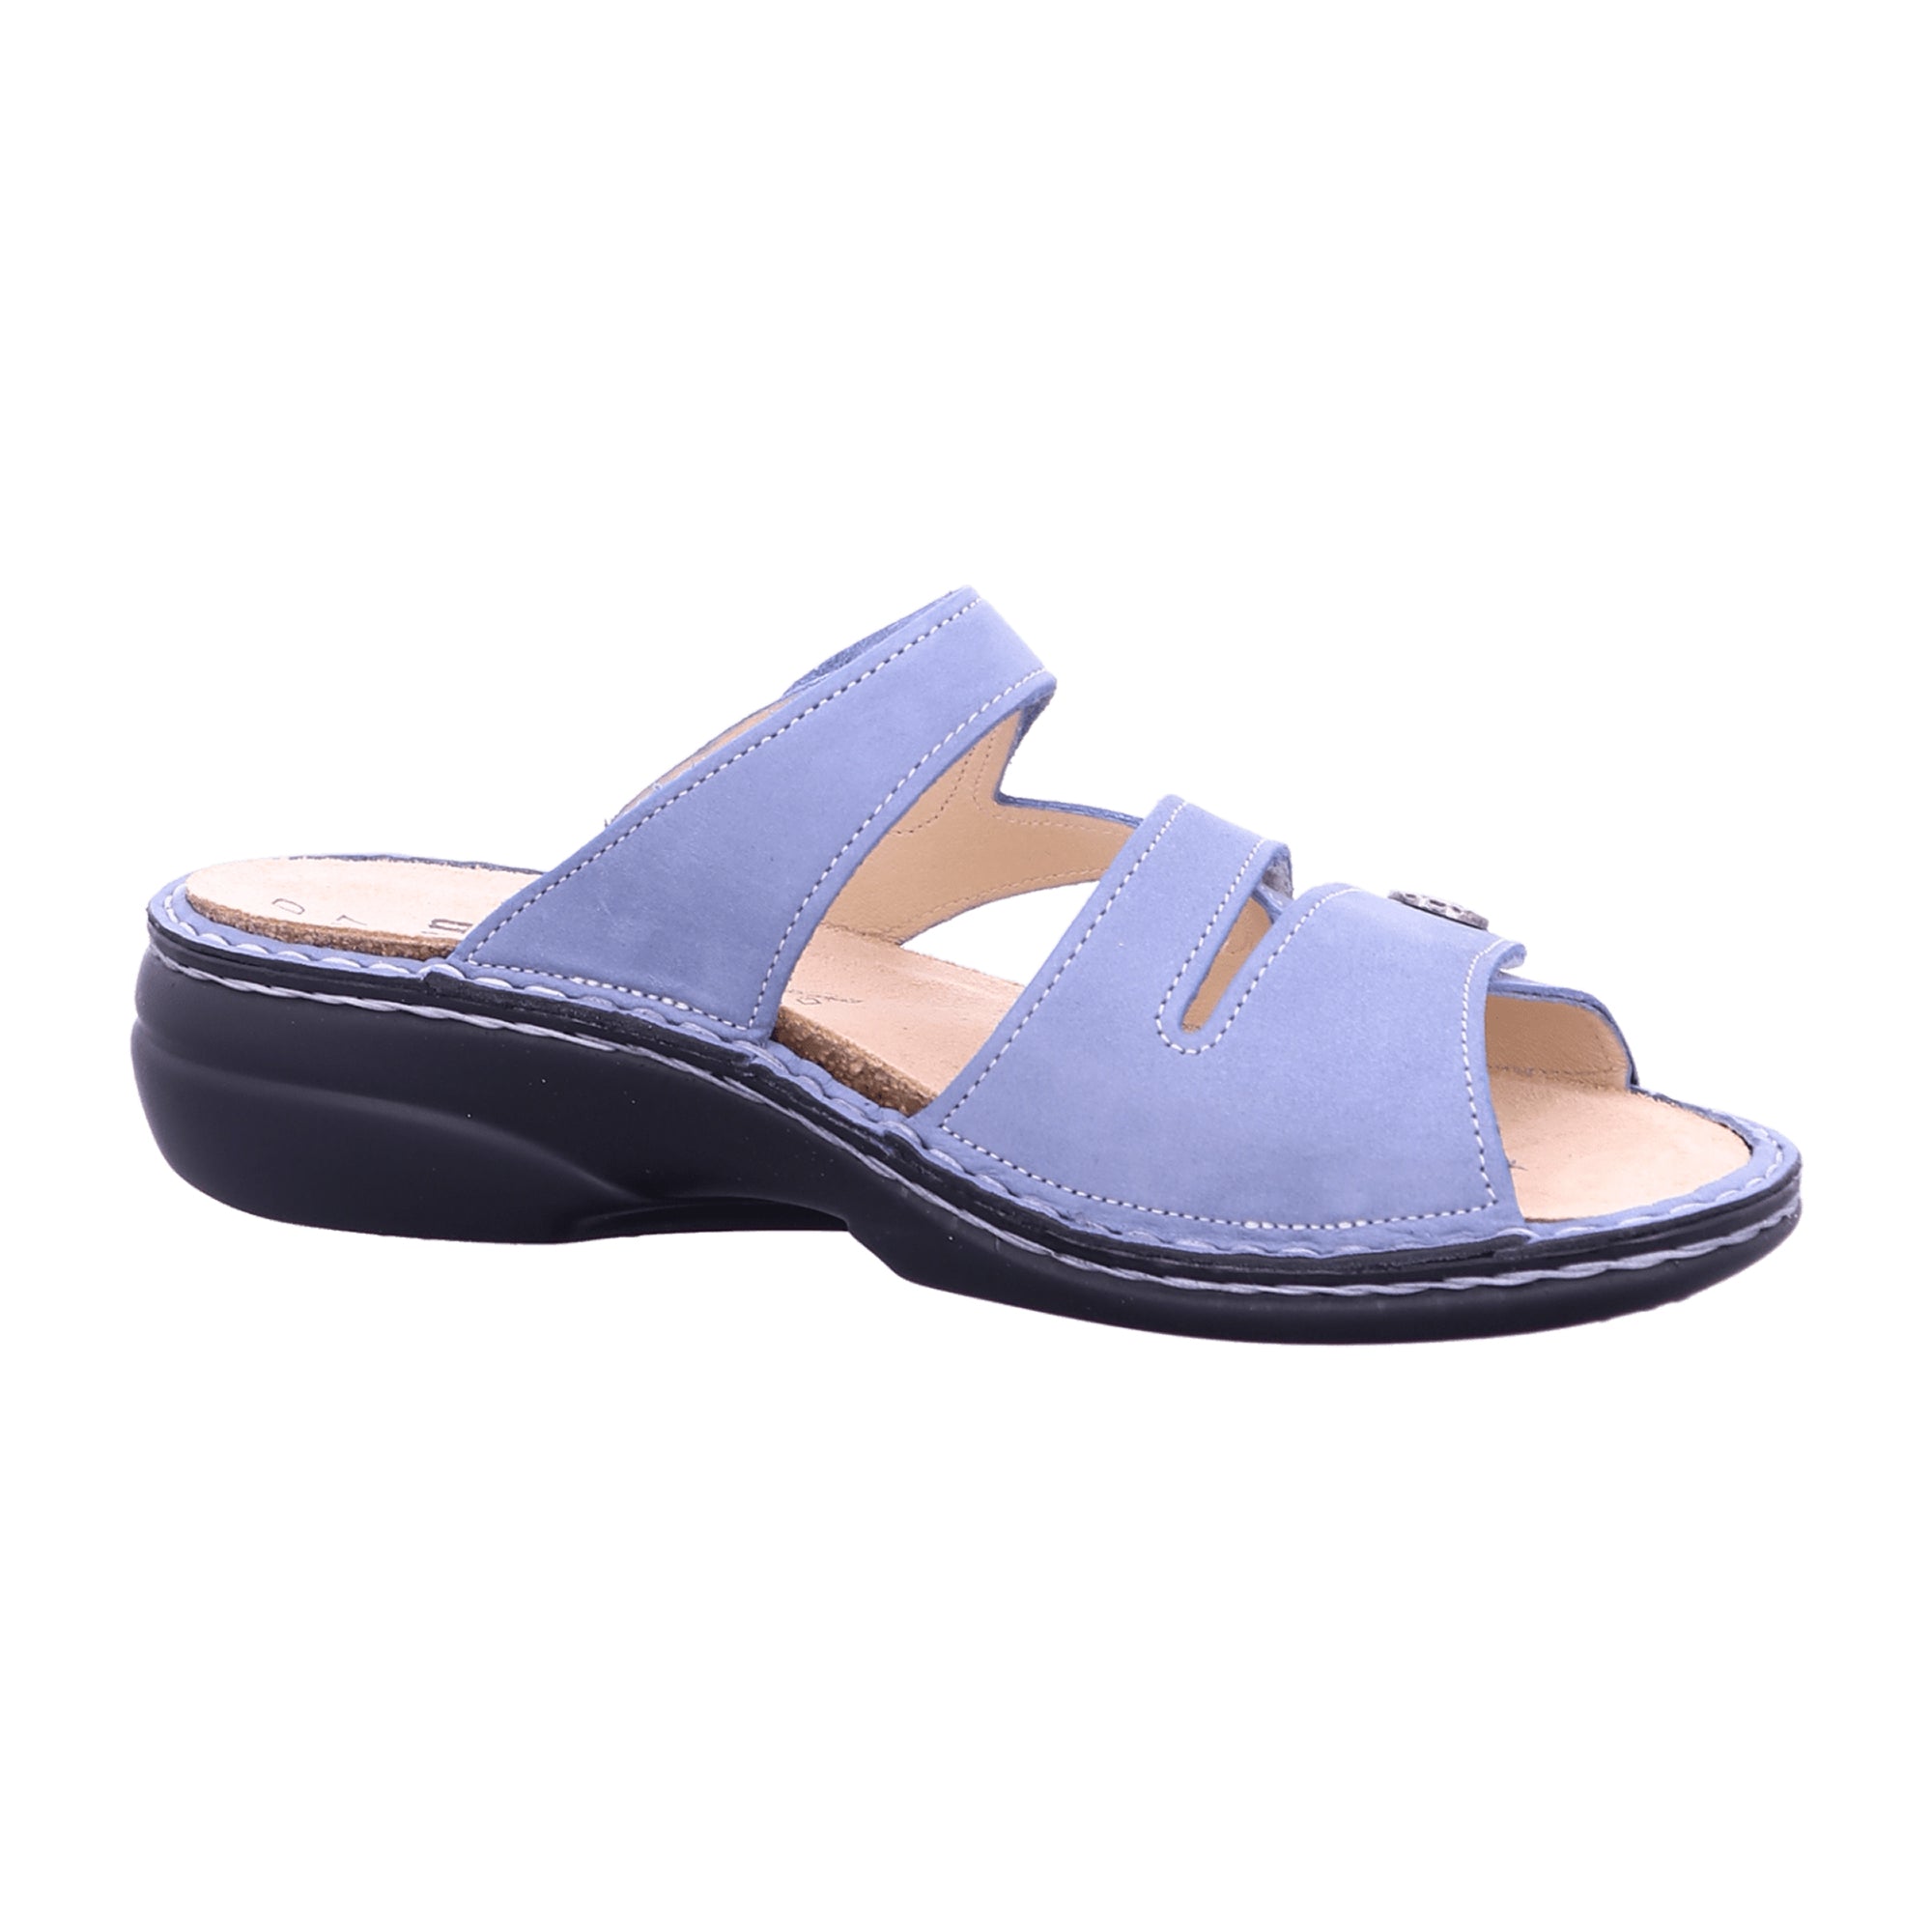 Finn Comfort Ventura-S Women's Comfort Sandals, Blue - Stylish & Durable